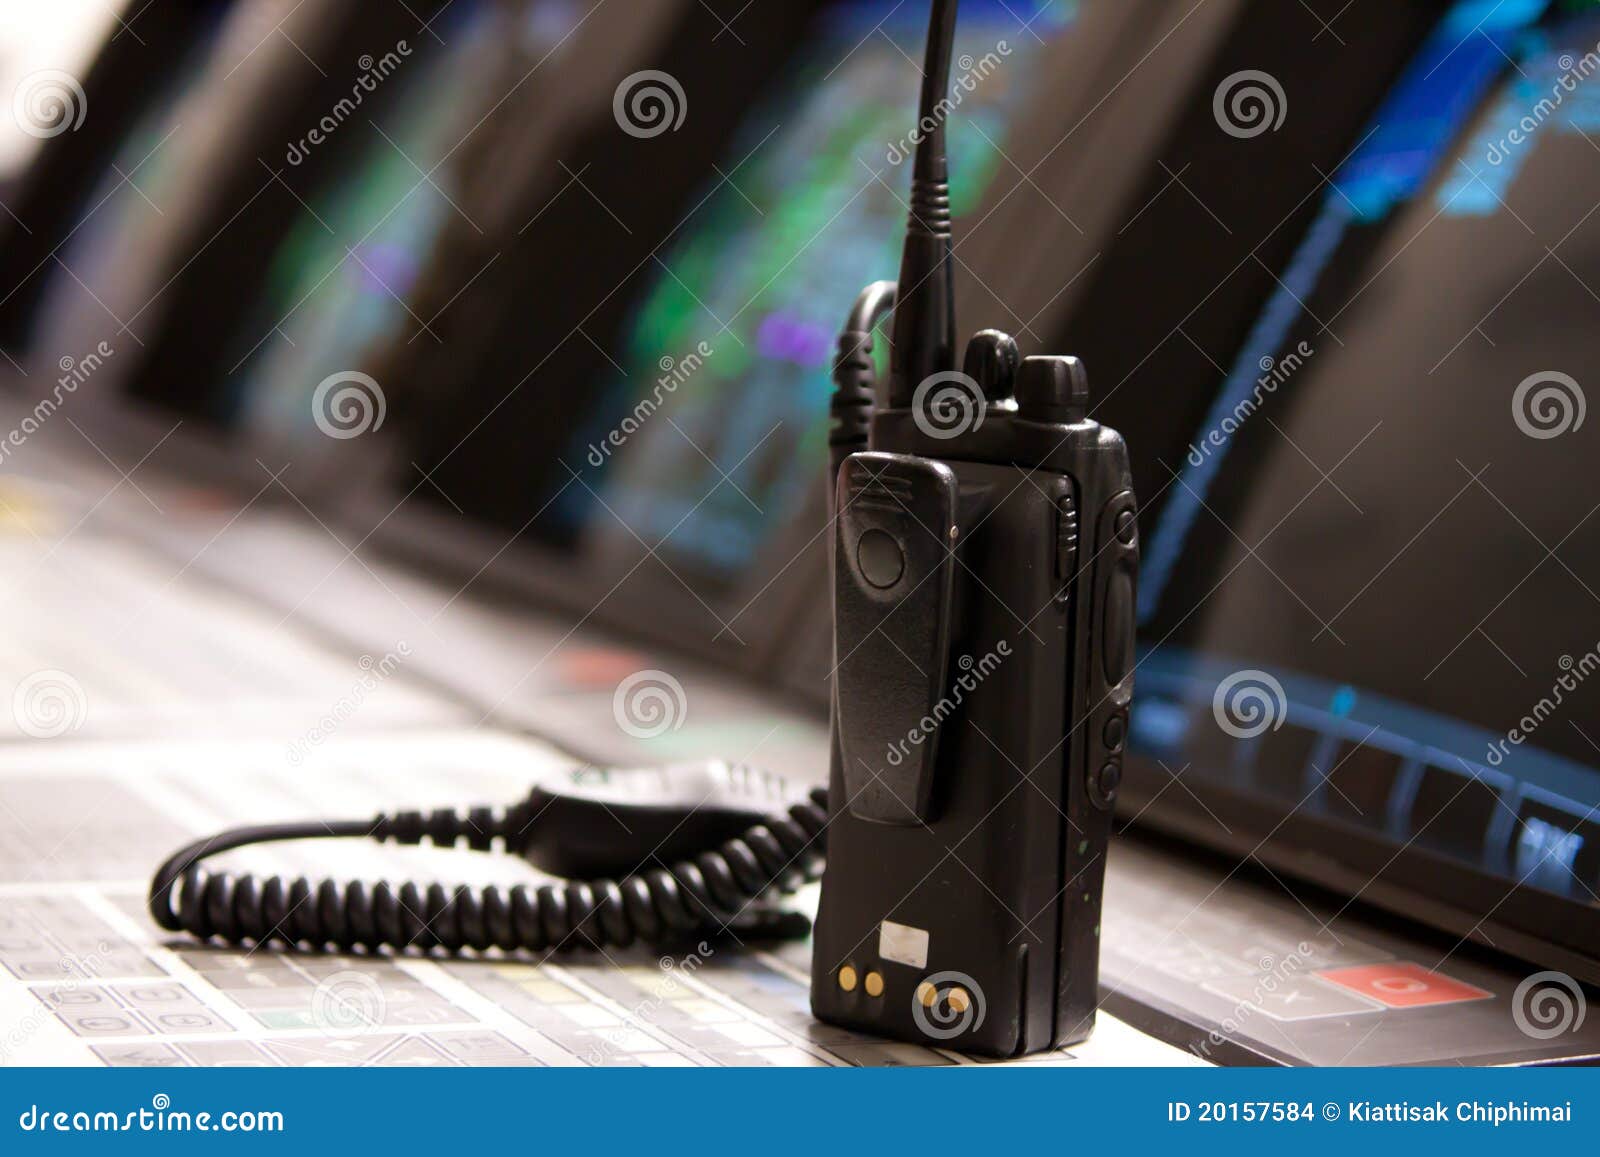 radio communications in control room